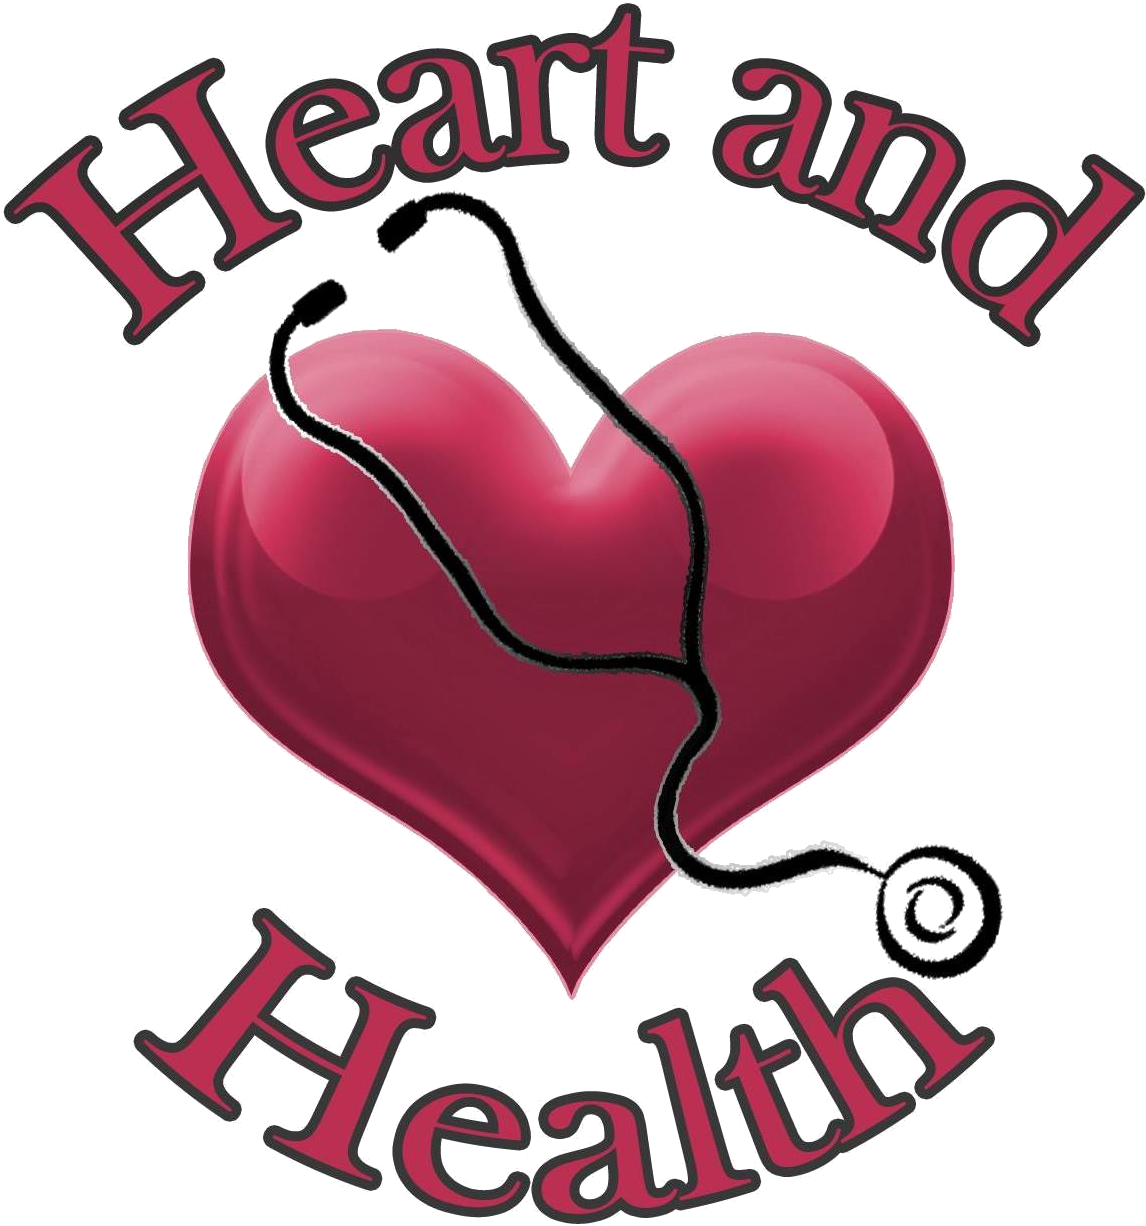 Heart And Health (1193x1285)